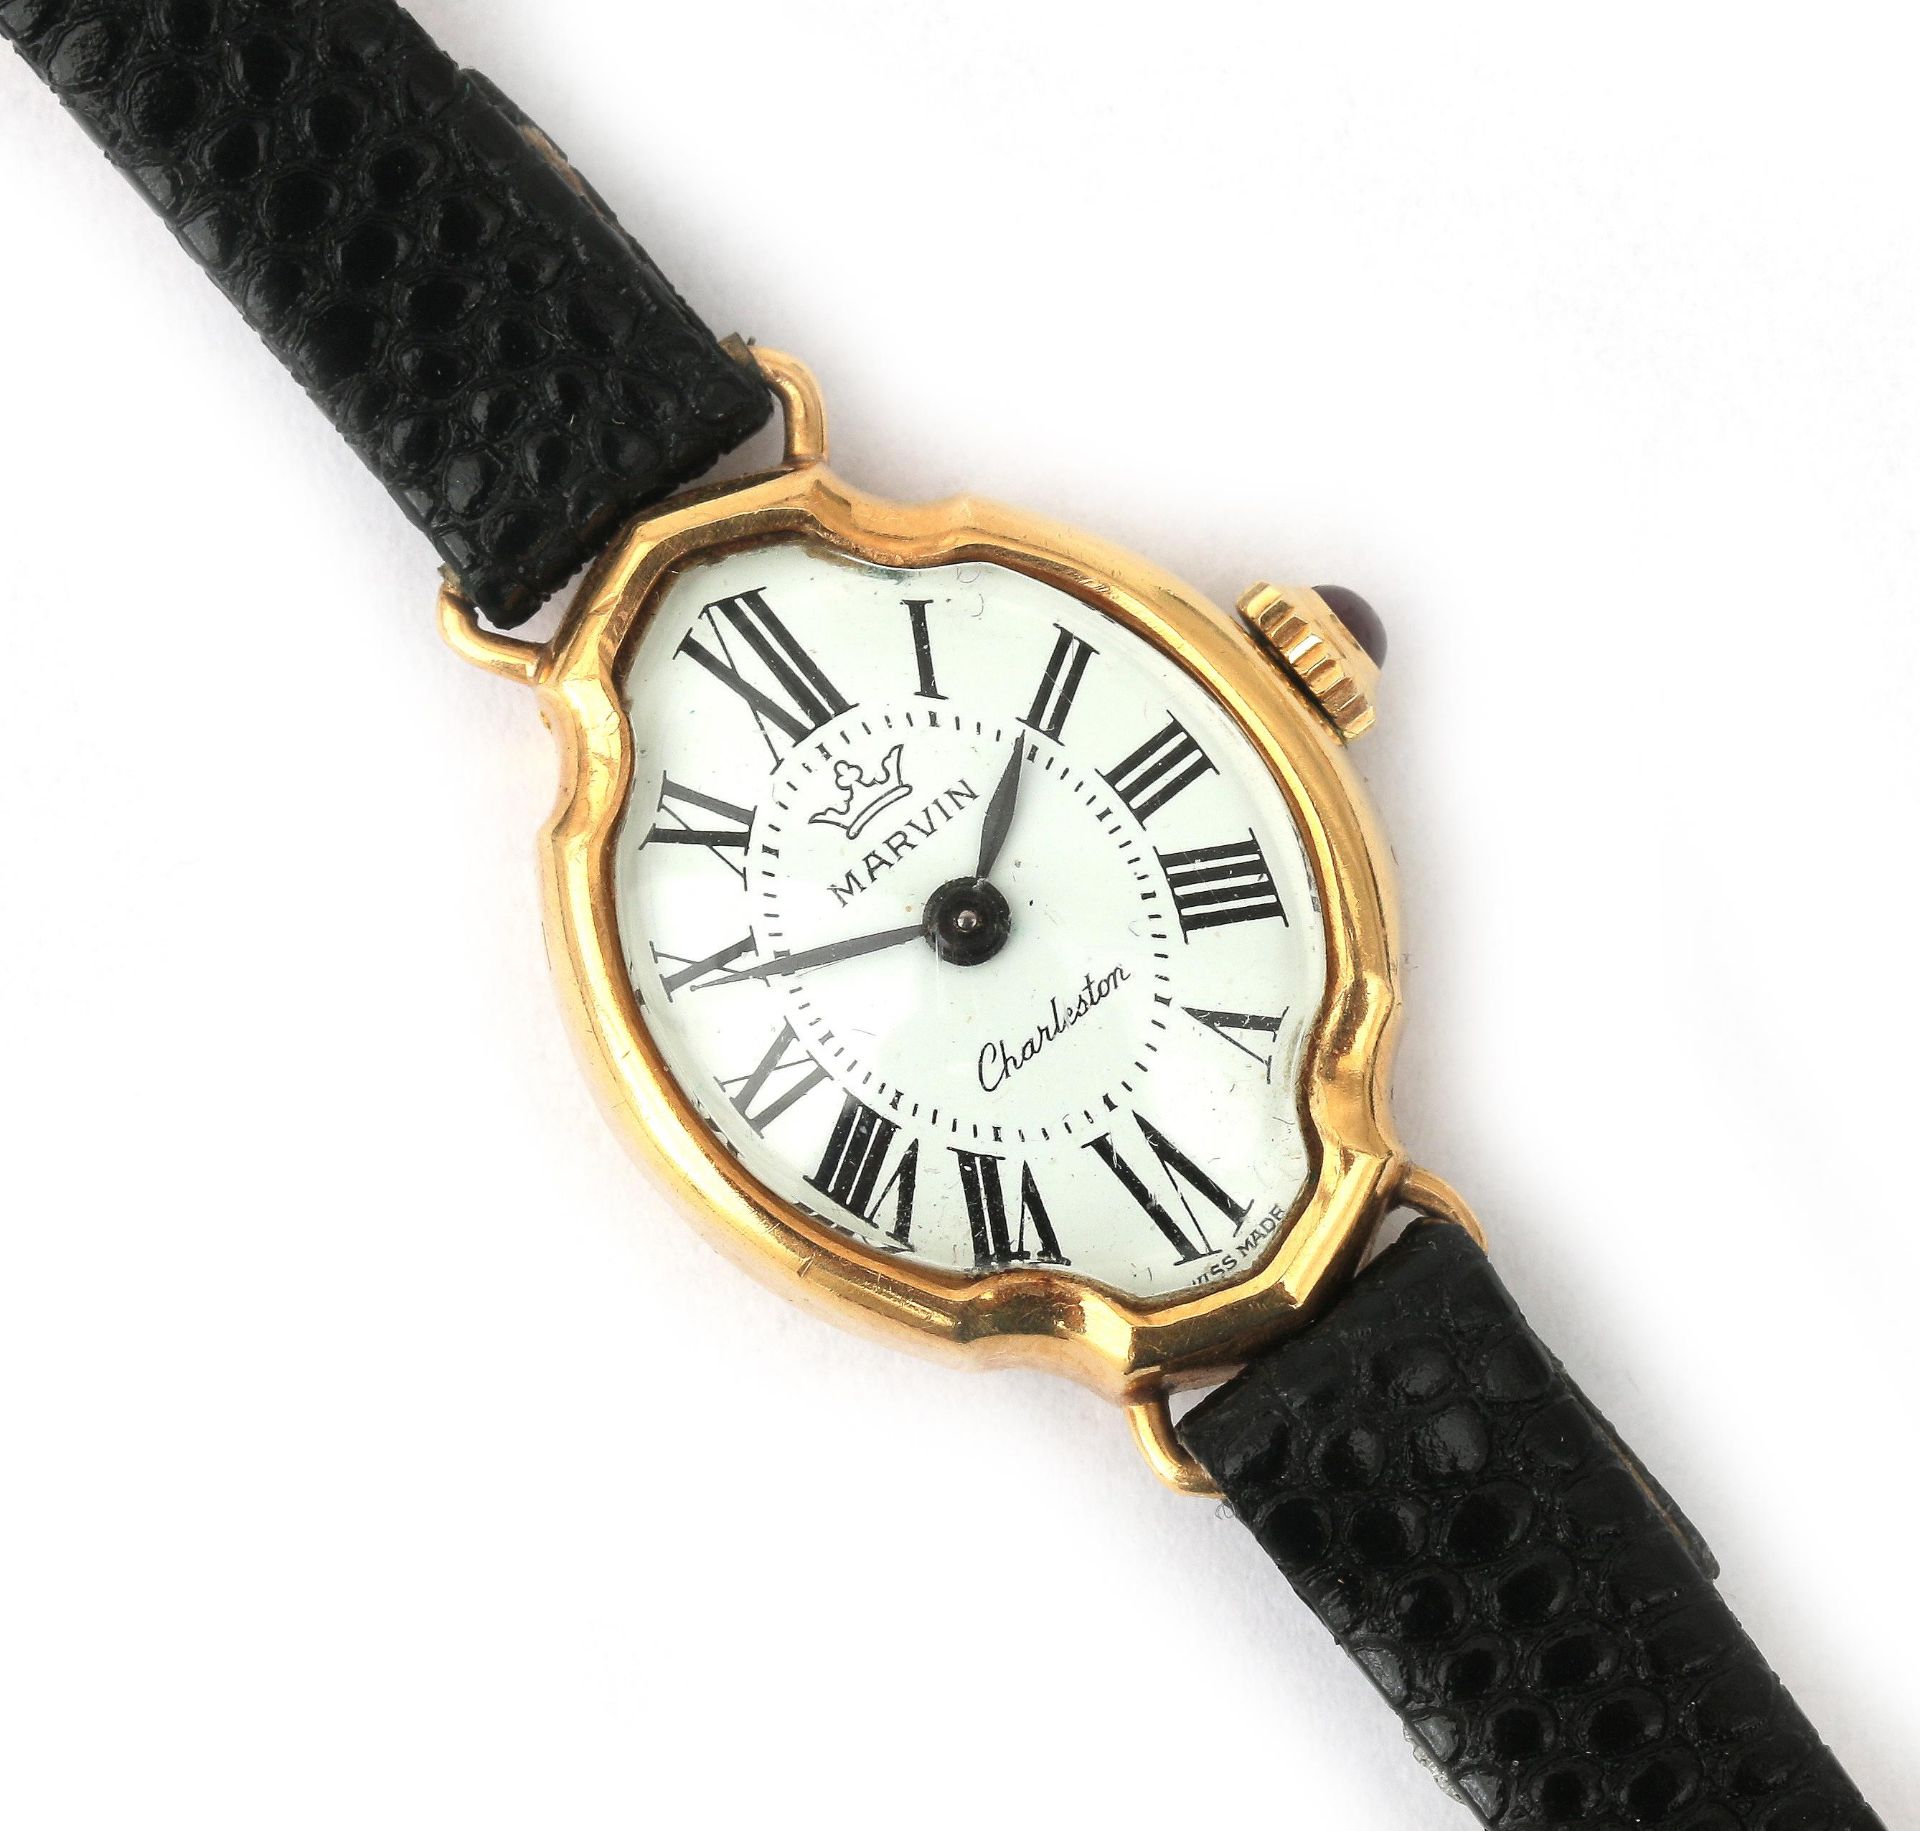 An 18 karat gold Marvin lady's wristwatch